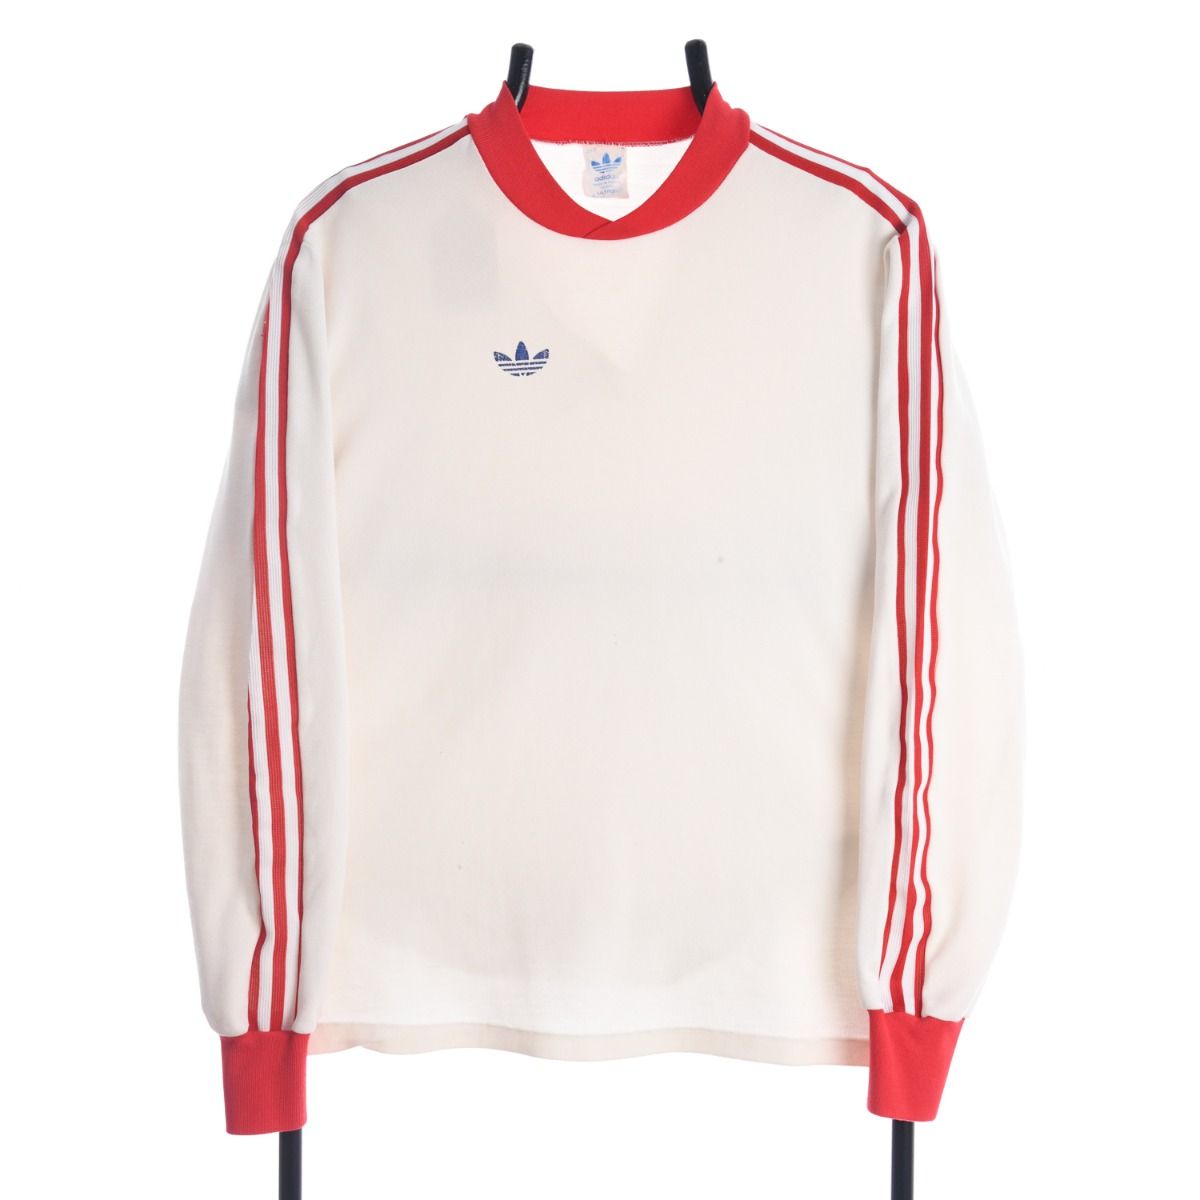 Adidas 1980s Long Sleeve Top